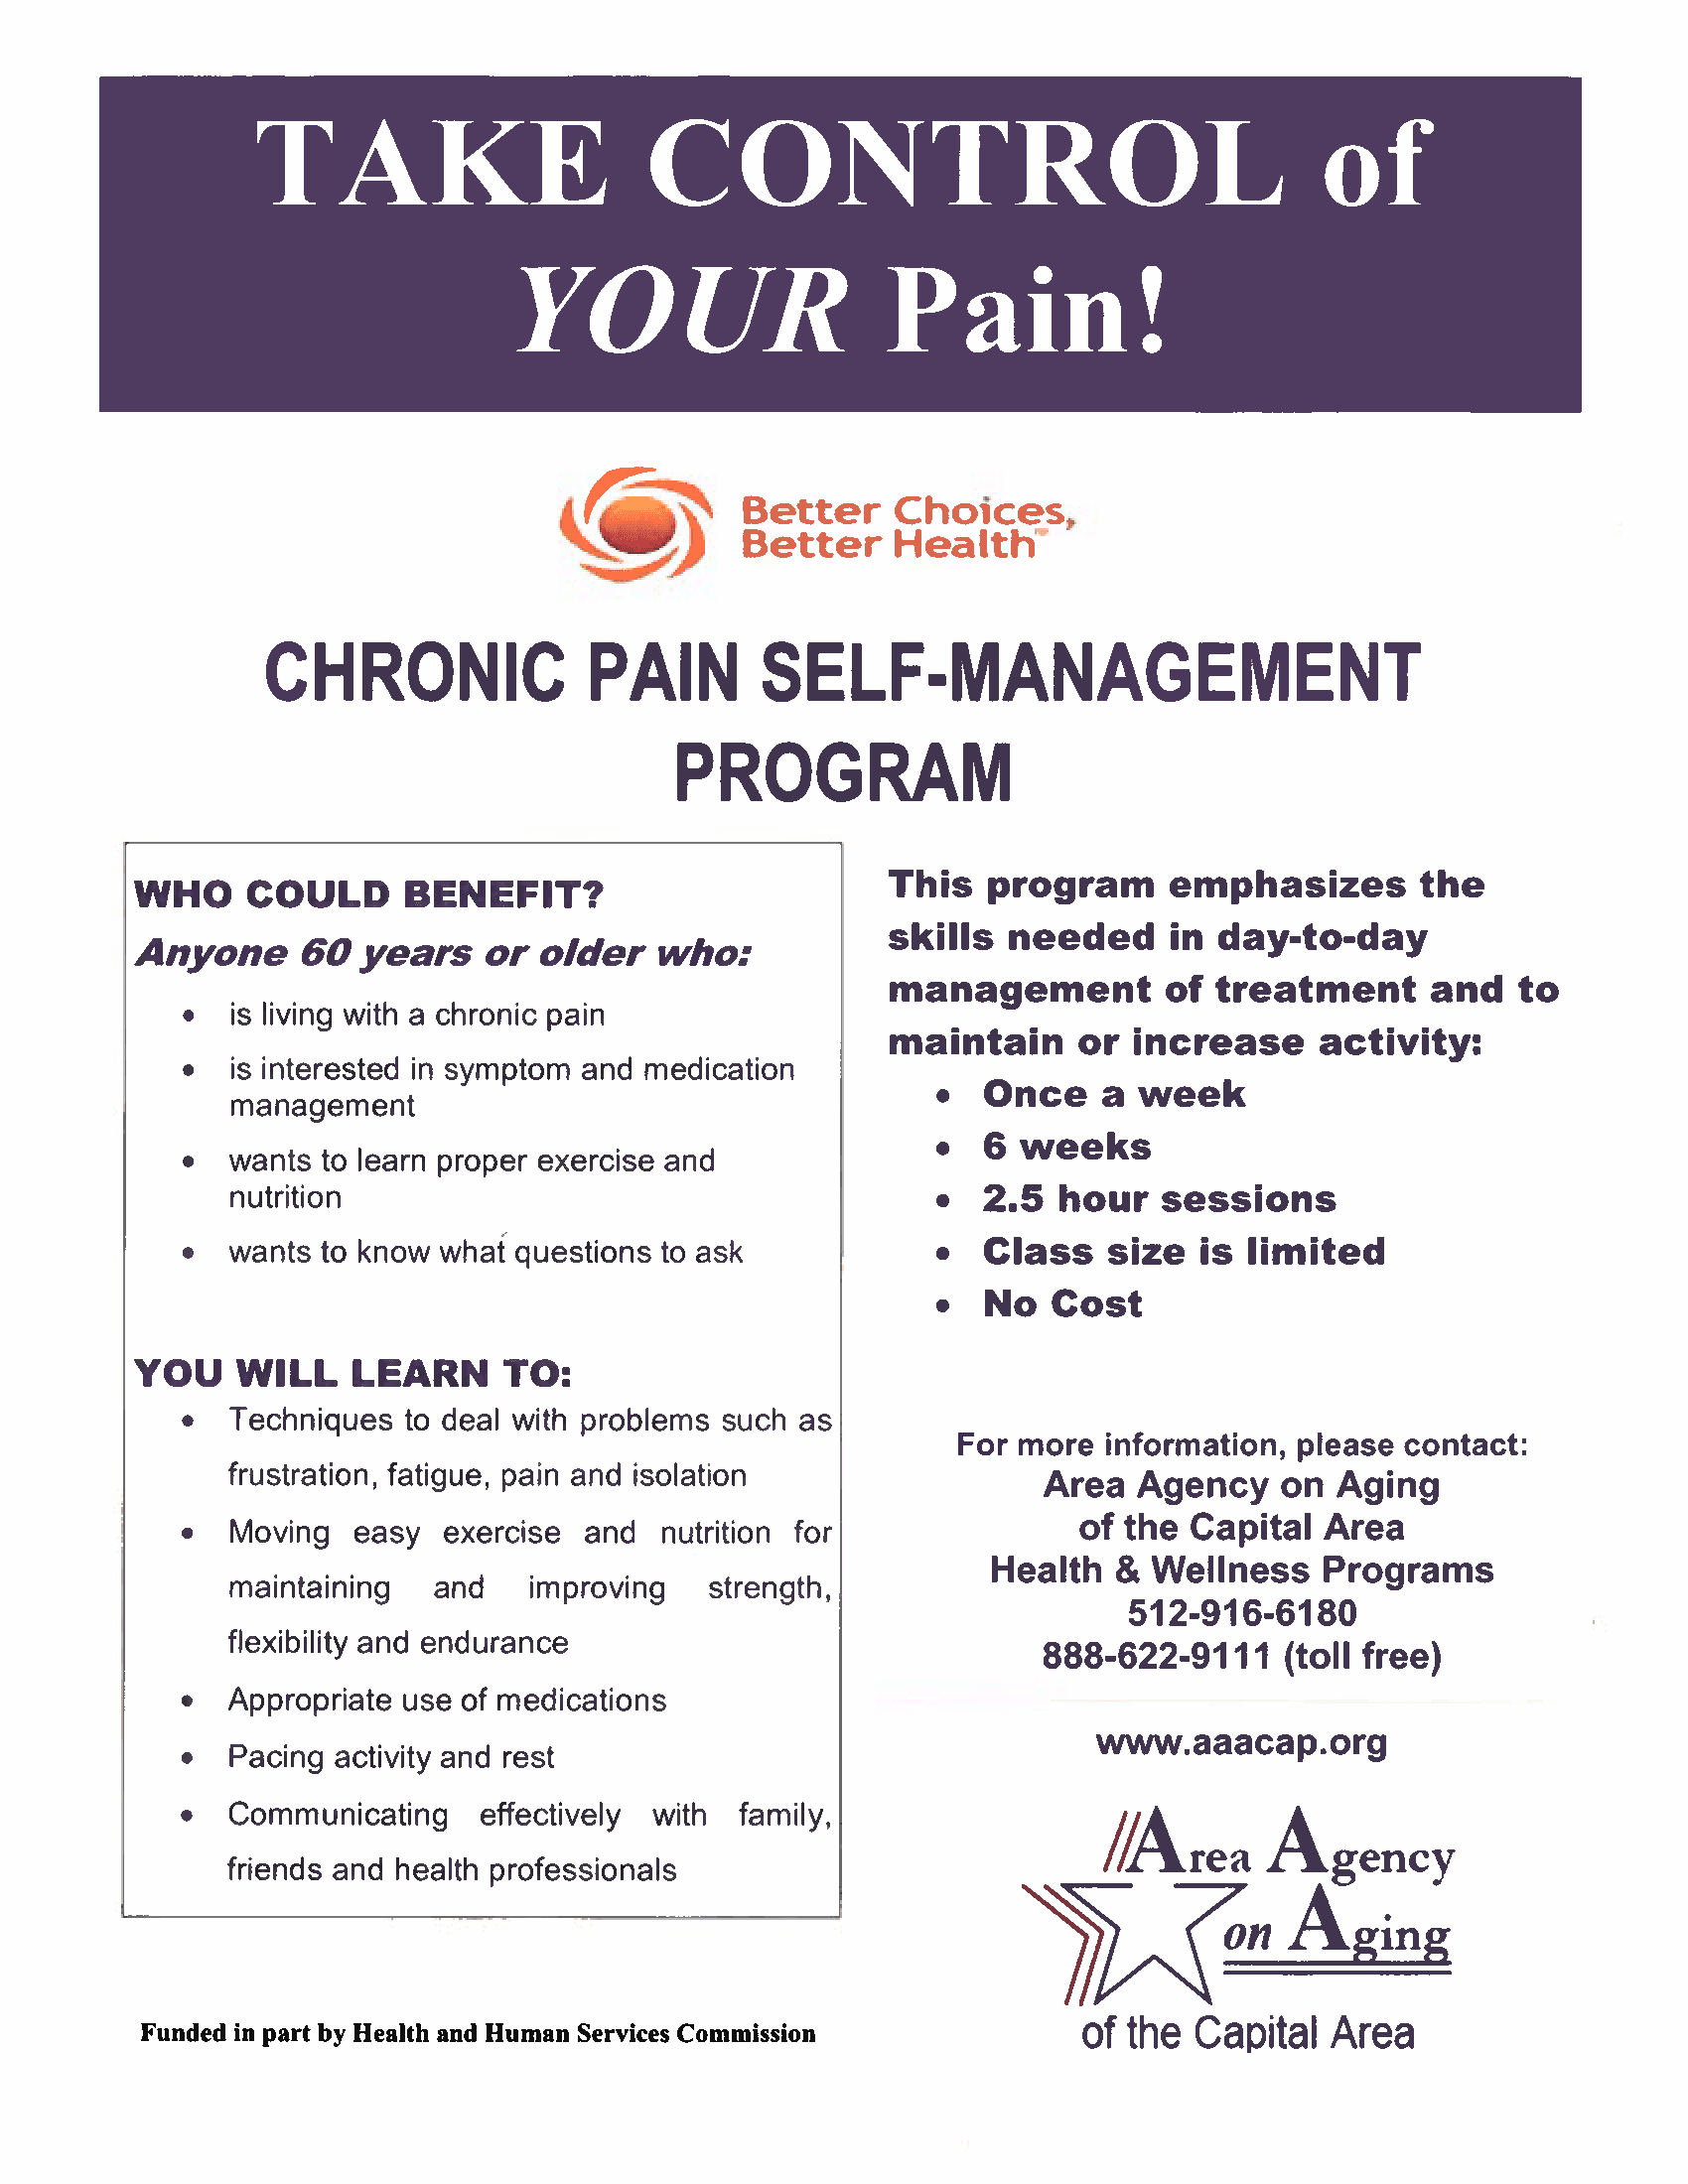 NEW: Chronic Pain Self-Management Workshop